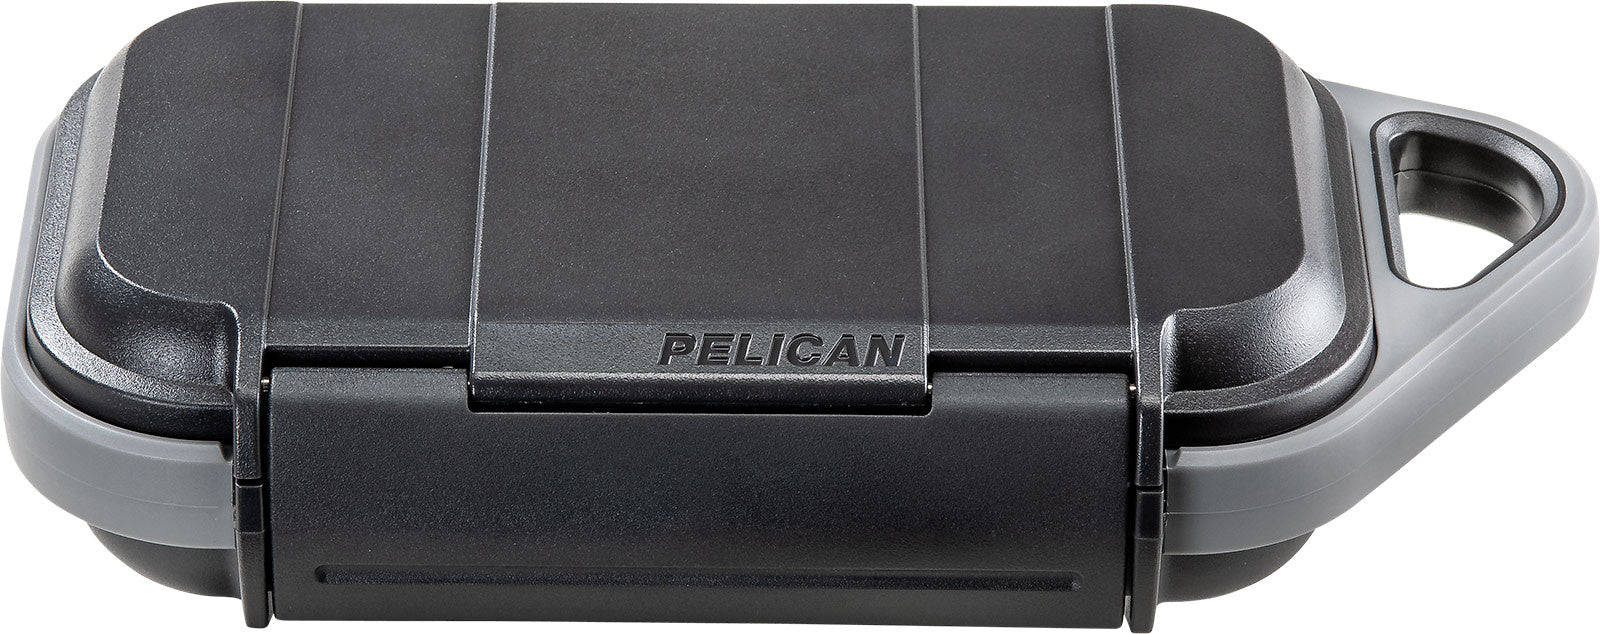 Pelican - Personal Utility Go Case G40